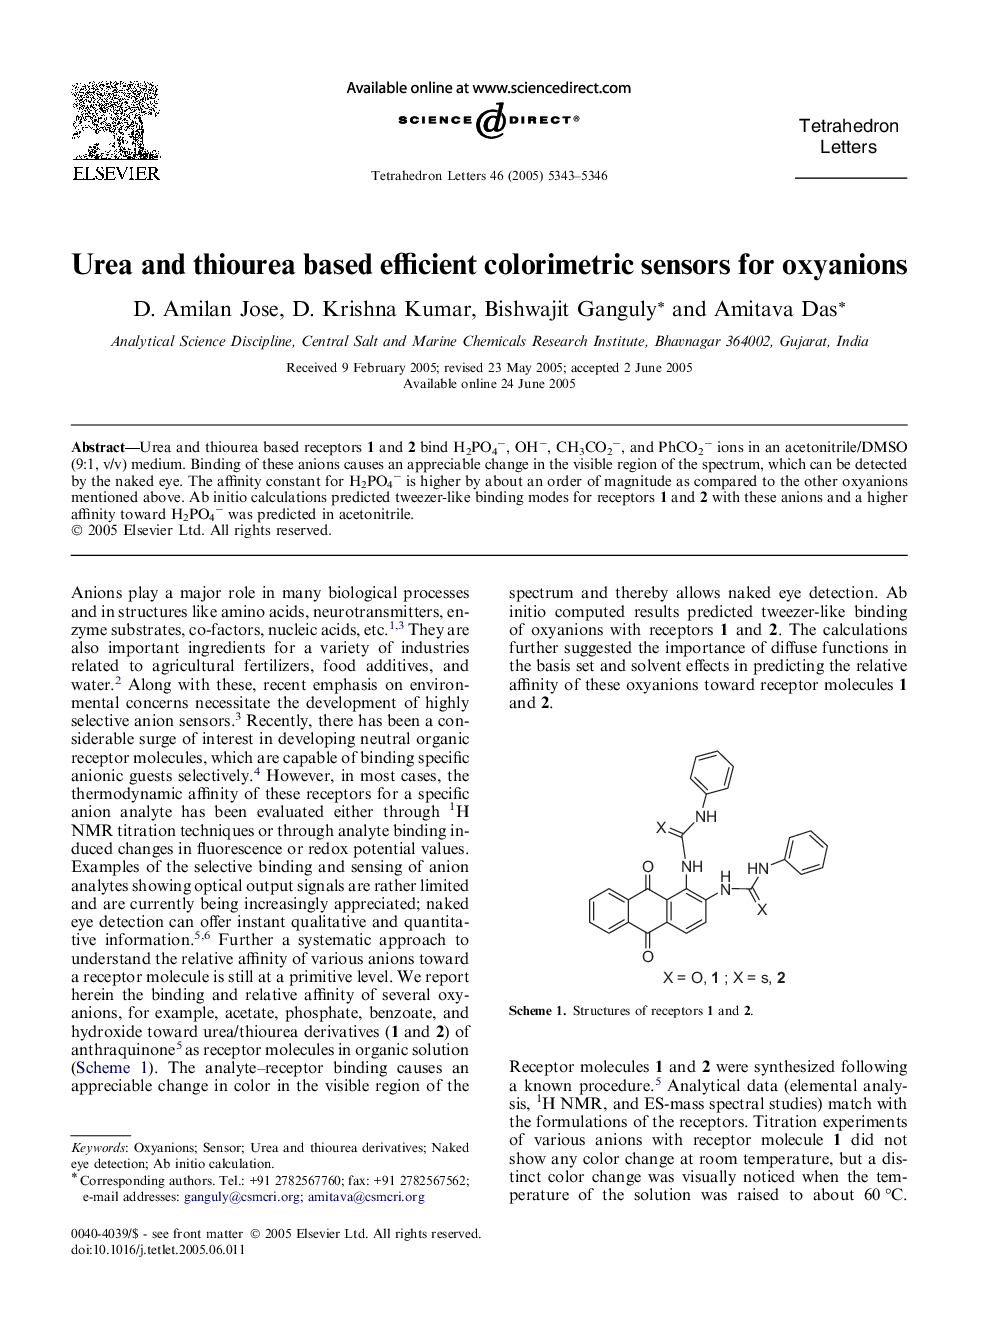 Urea and thiourea based efficient colorimetric sensors for oxyanions